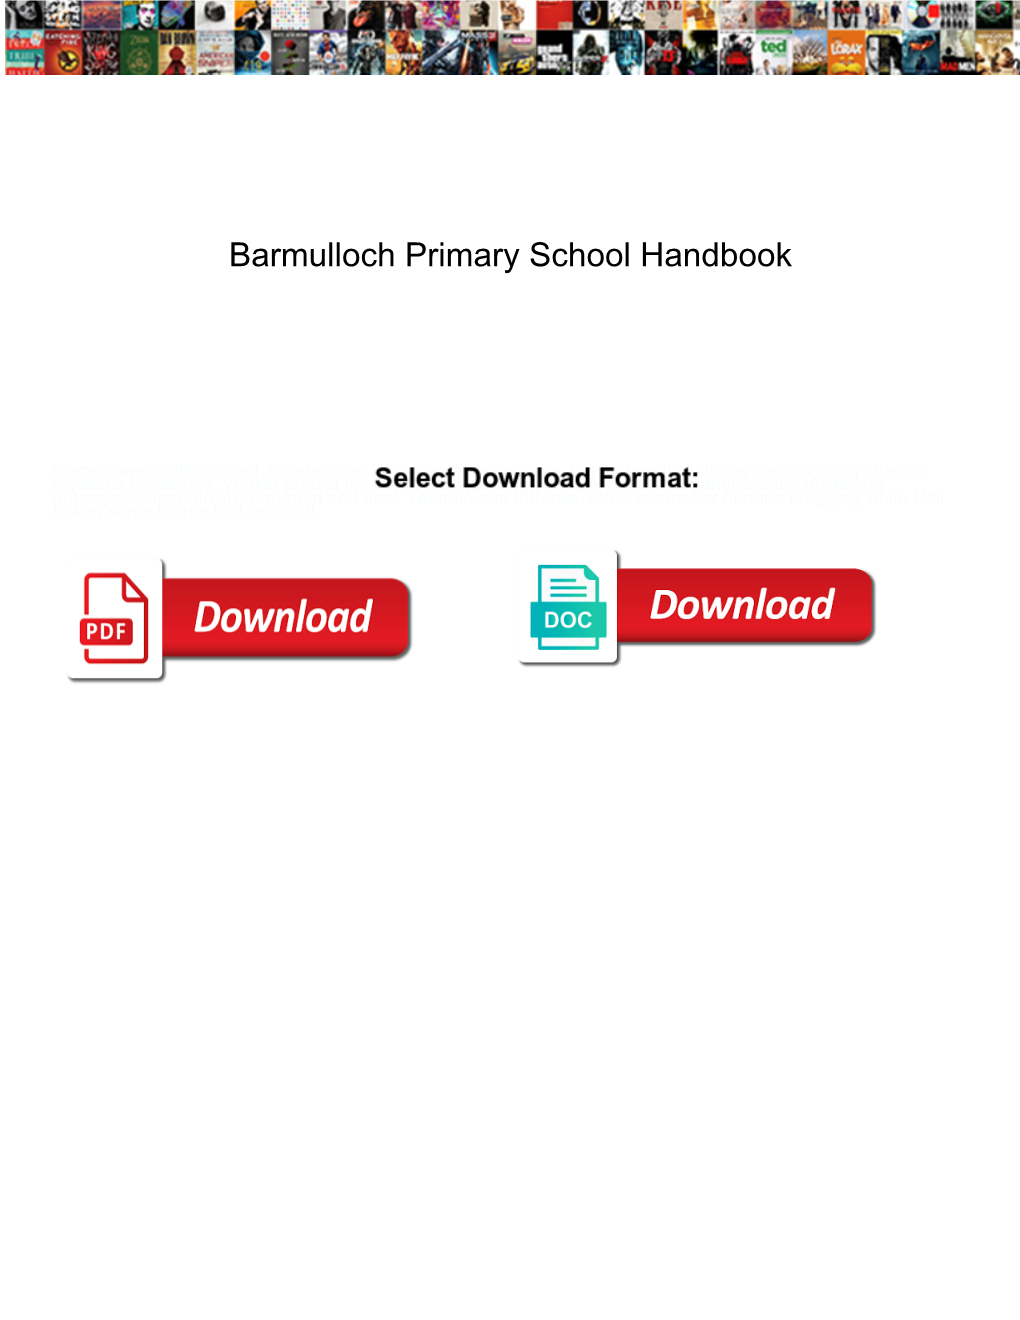 Barmulloch Primary School Handbook